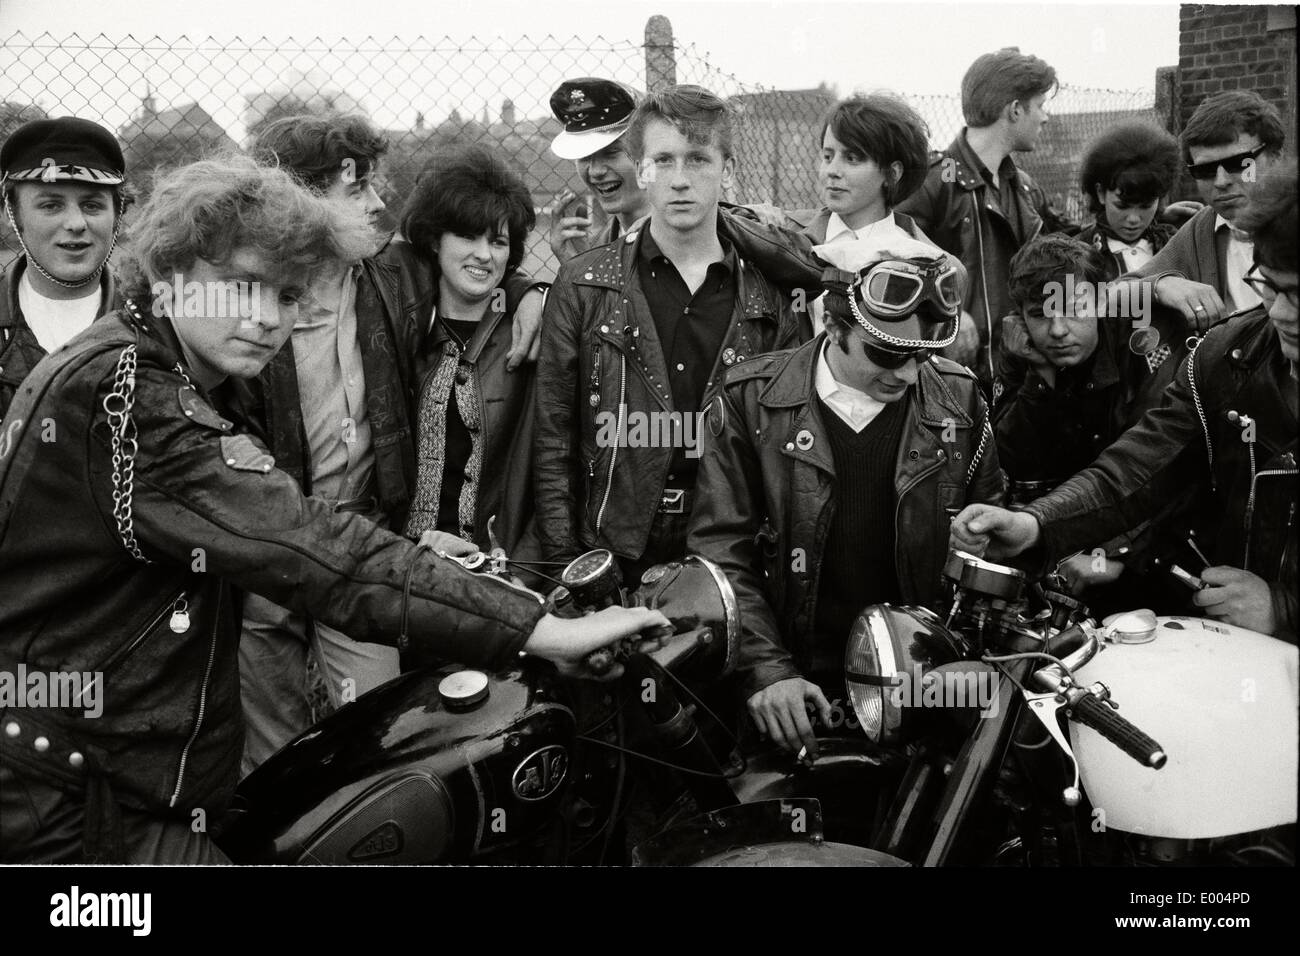 Club de moto dans la banlieue de Londres, 1964 Banque D'Images